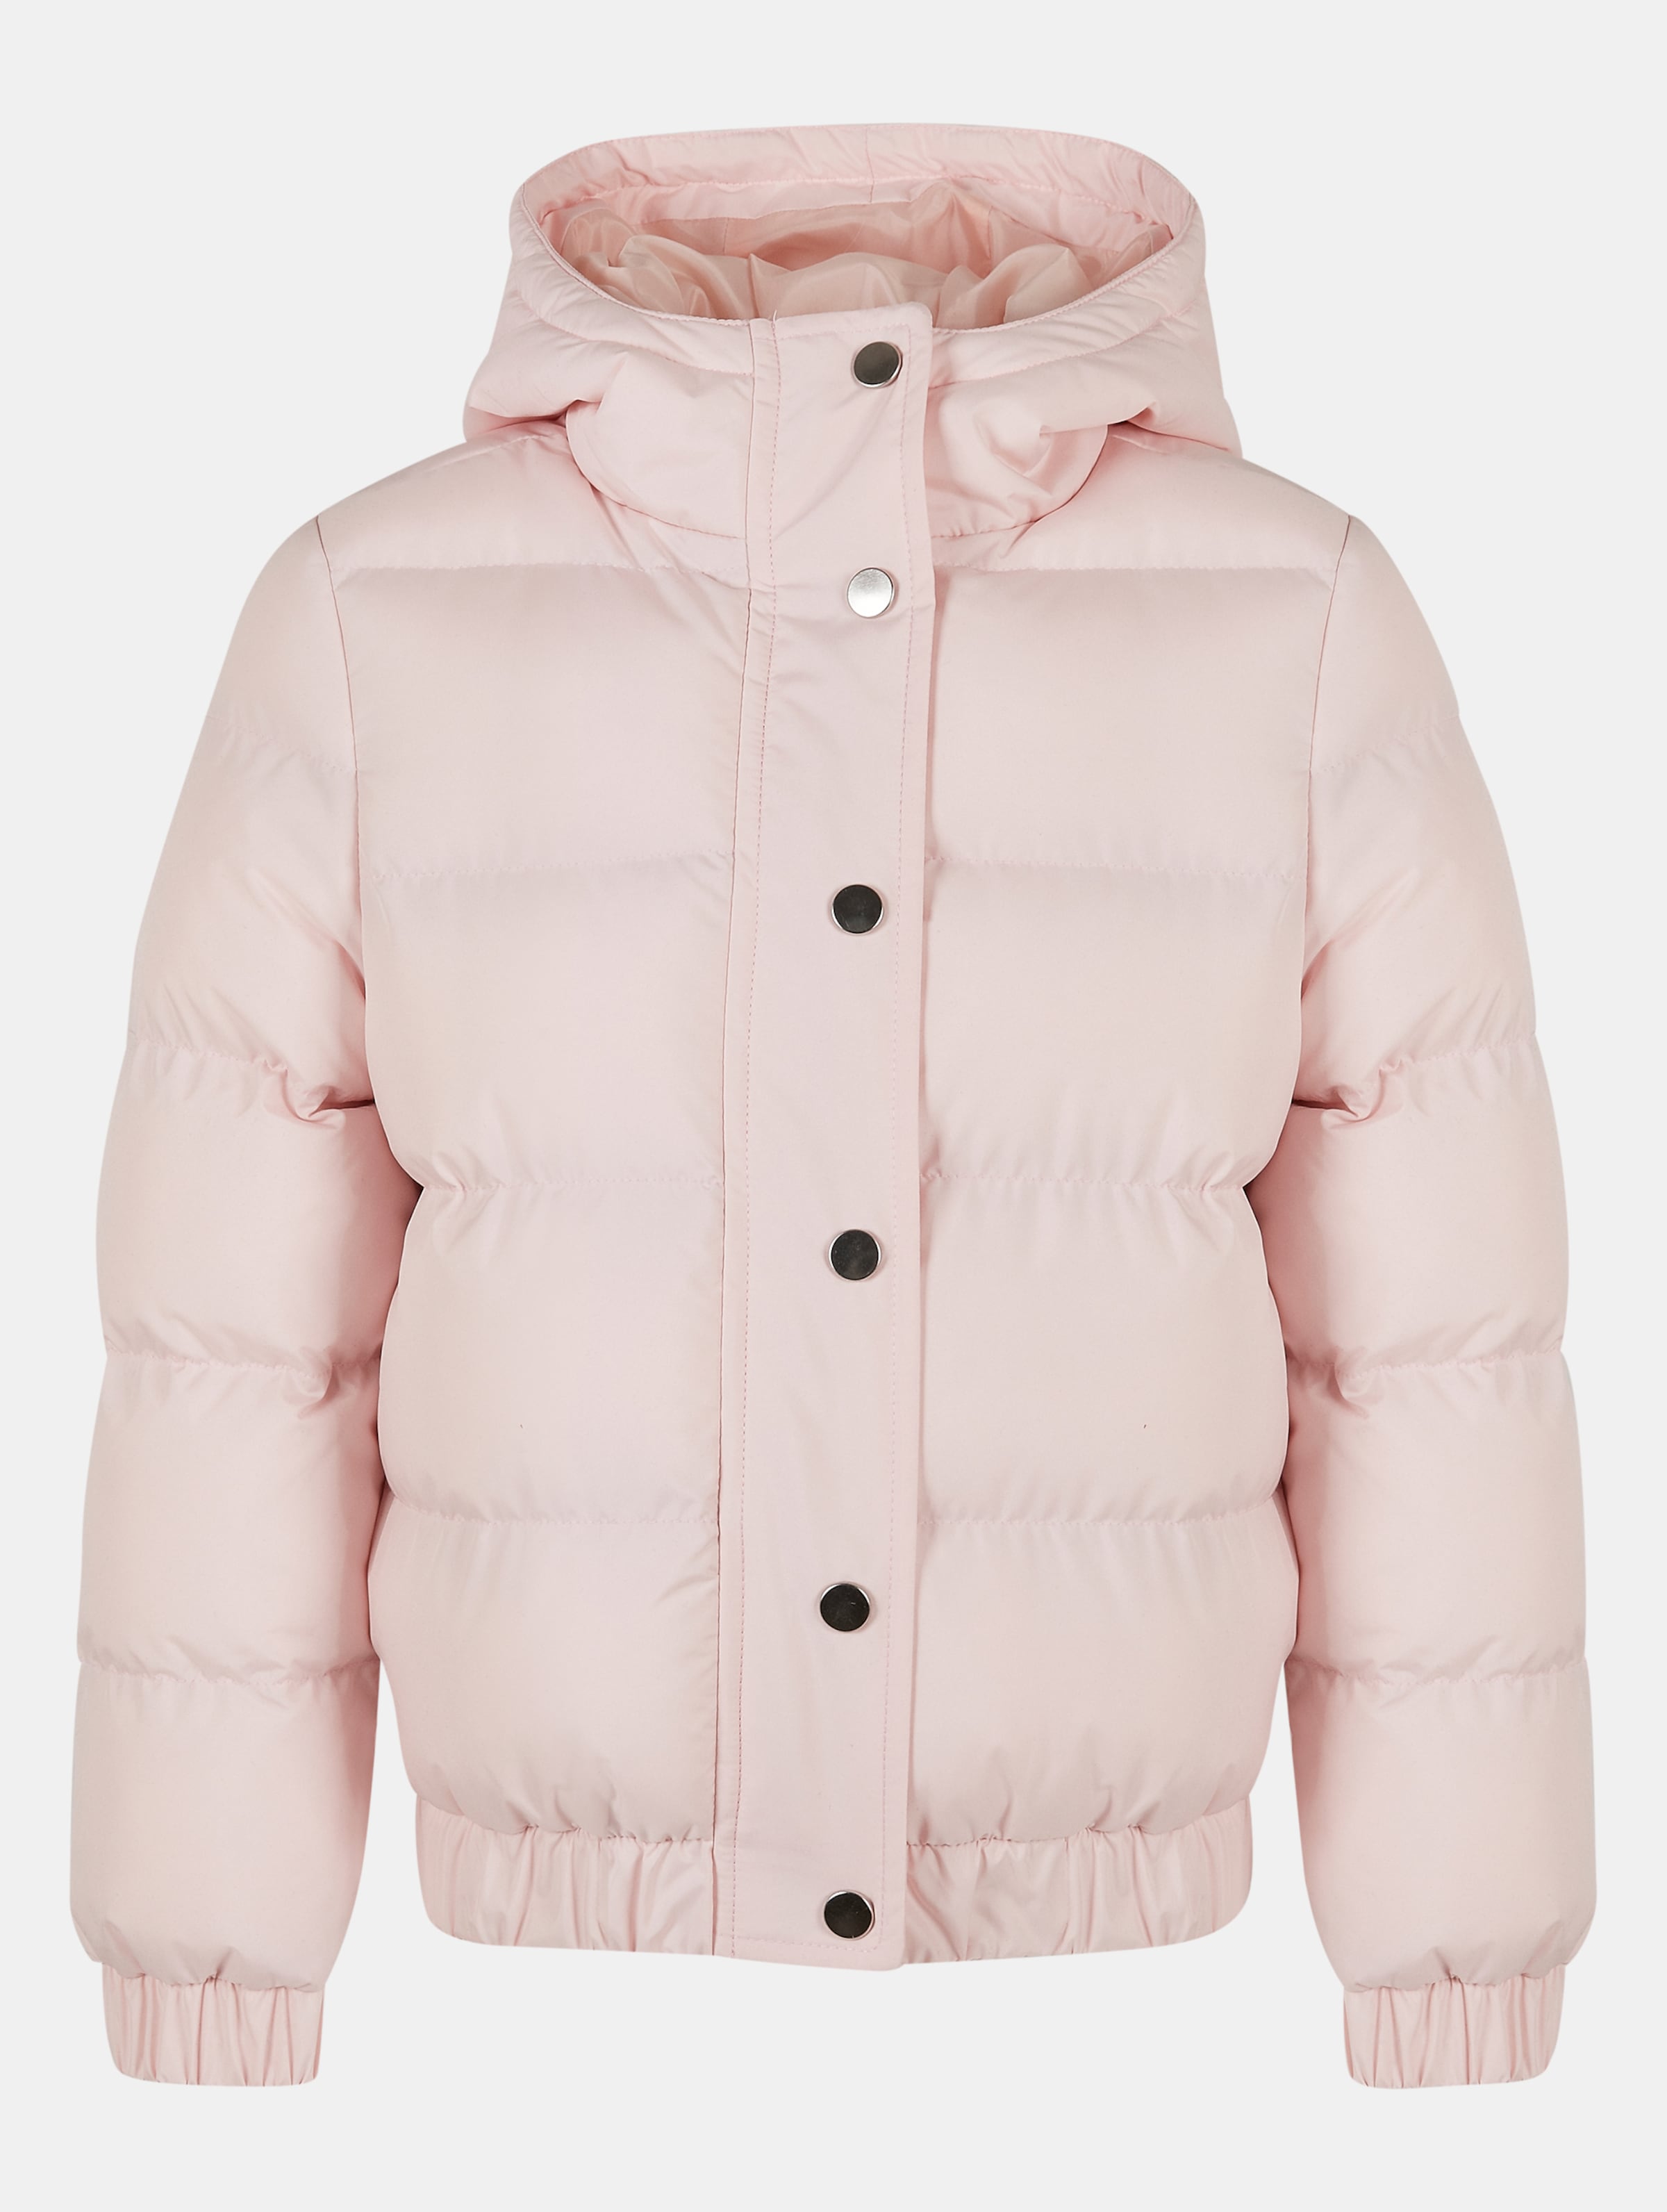 Urban Classics Girls Hooded Puffer Jacket Kinder,Unisex op kleur roze, Maat 134140